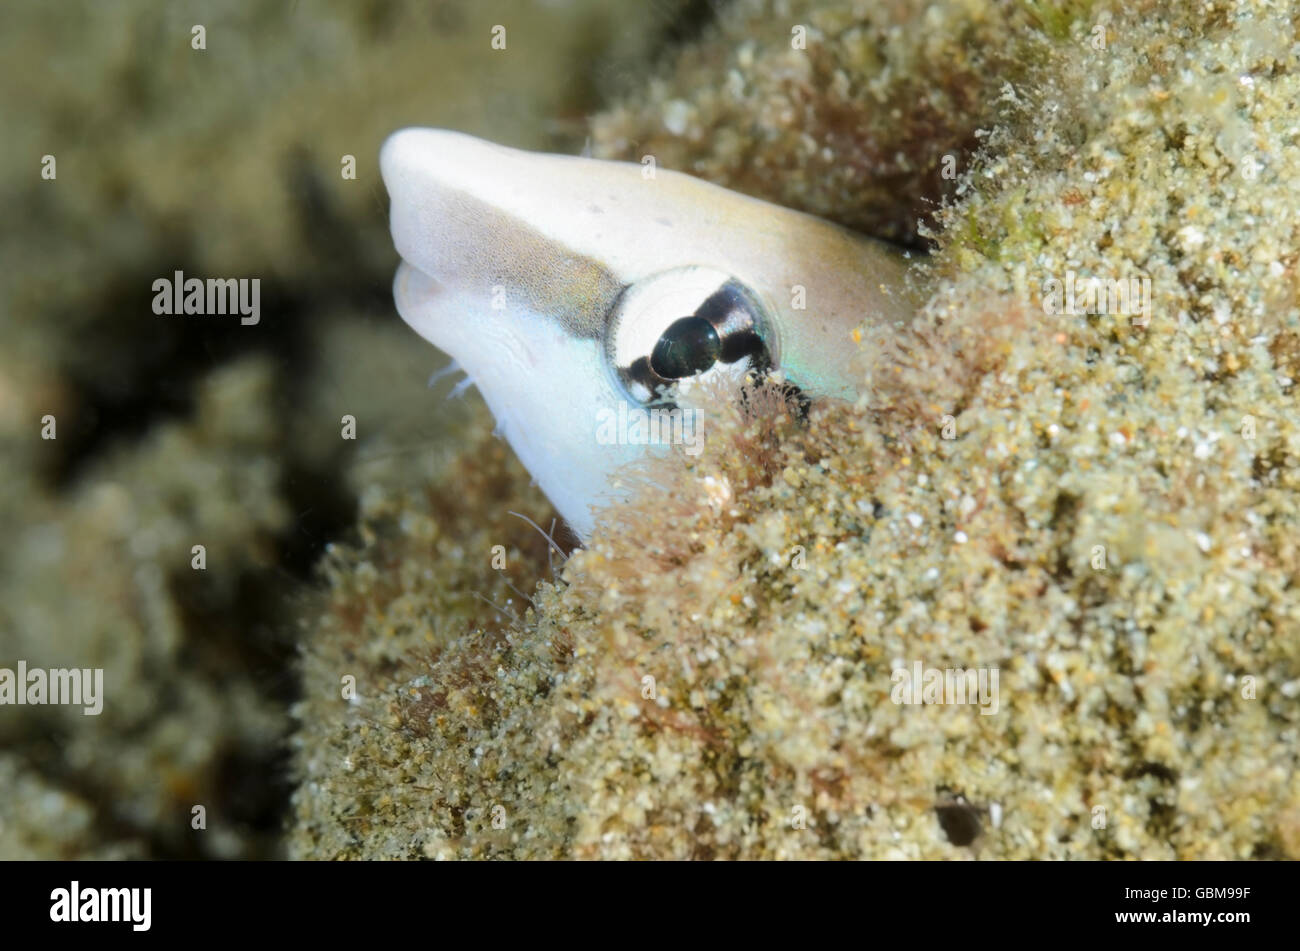 False cleanerfish, Aspidontus taeniatus, Ambon, Maluku, Indonesia, Pacific Stock Photo